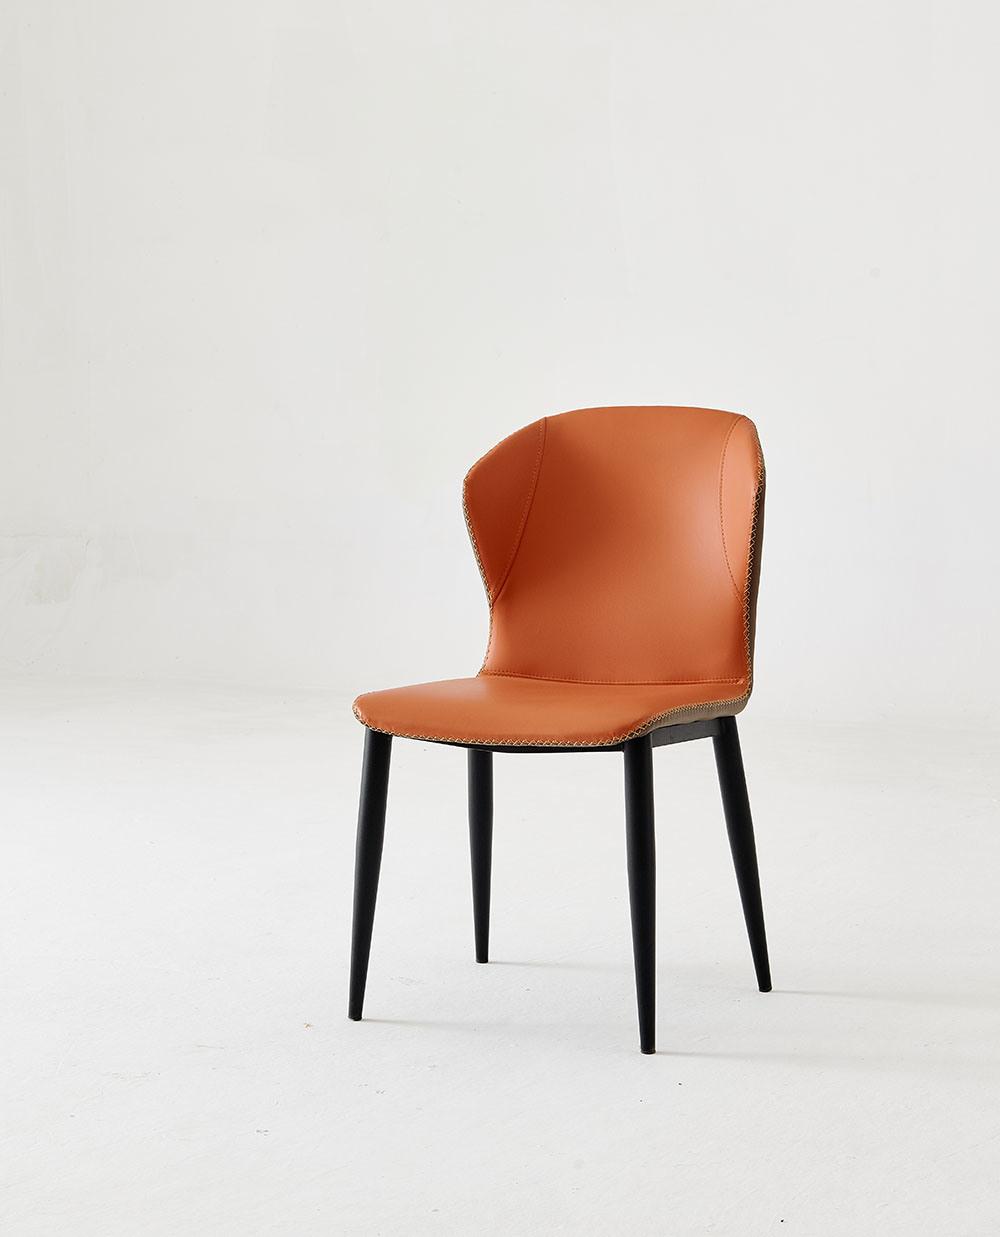 Classic New Design Furniture Orange Office Chair